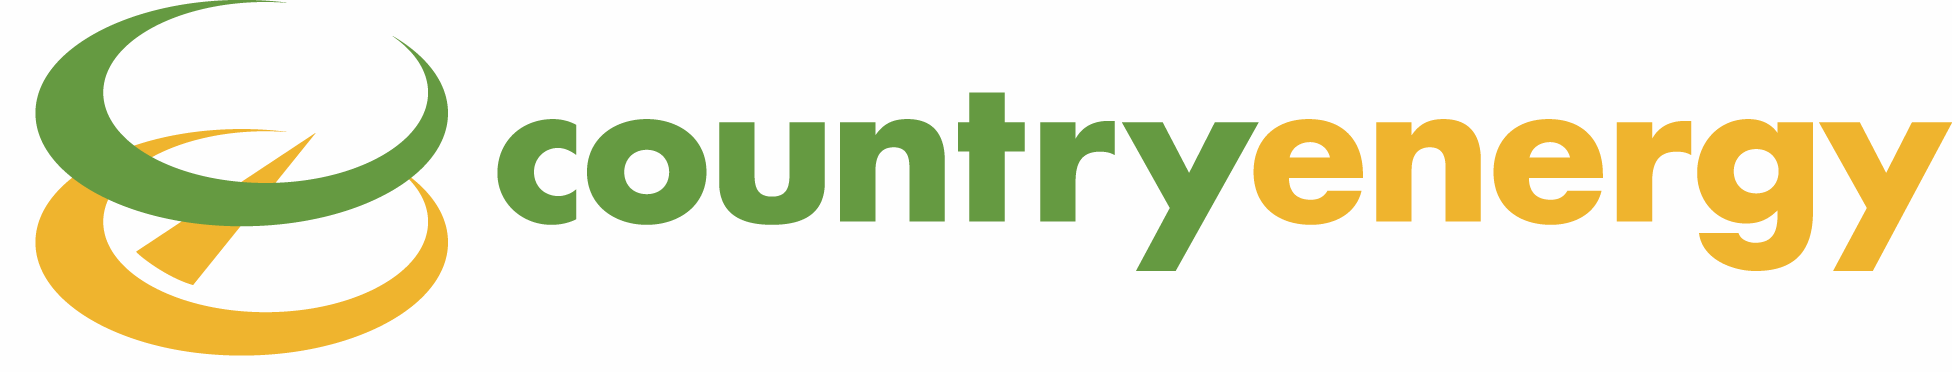 countryenergy Logo photo - 1